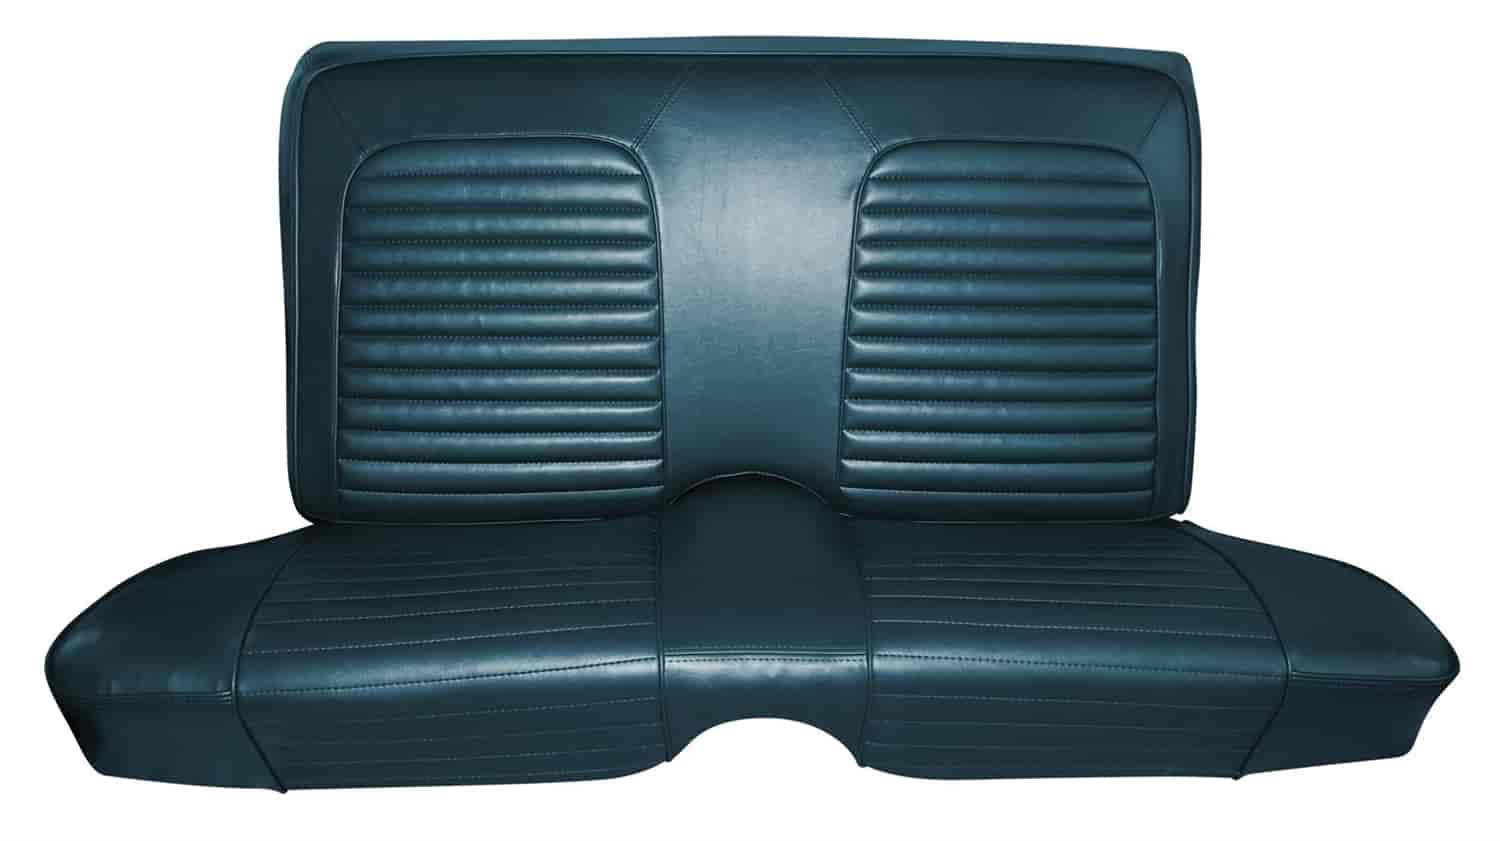 1965 Ford Falcon Futura 4-Door Station Wagon Interior Rear Bench Seat Upholstery Set